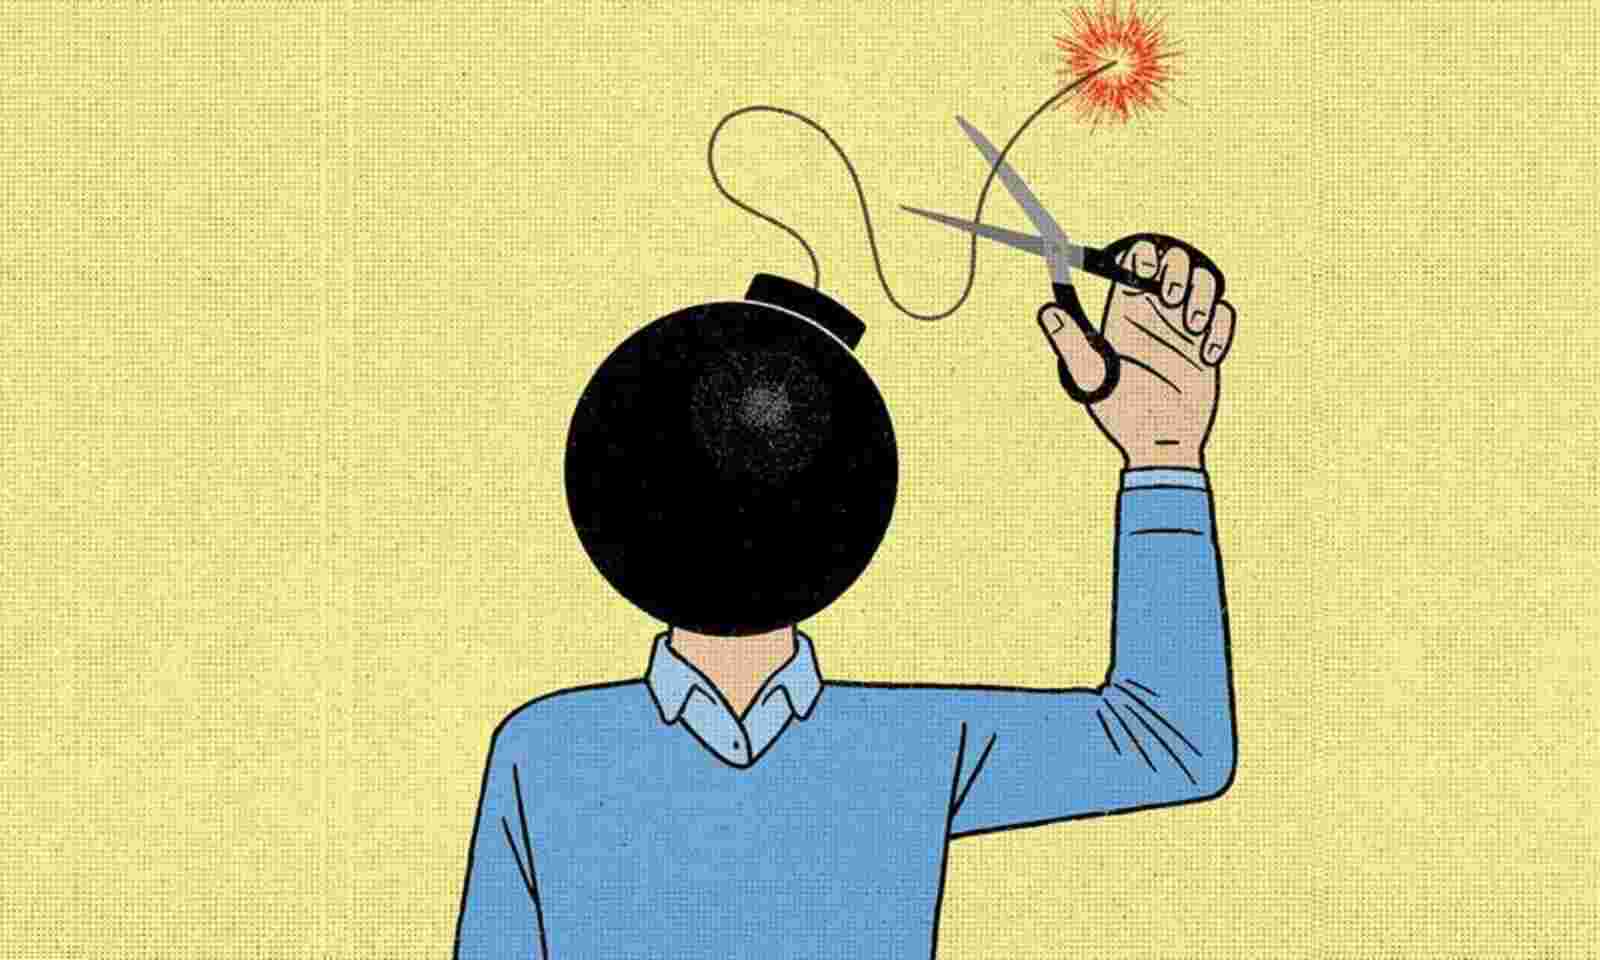 An illustration and artwork describing anger management